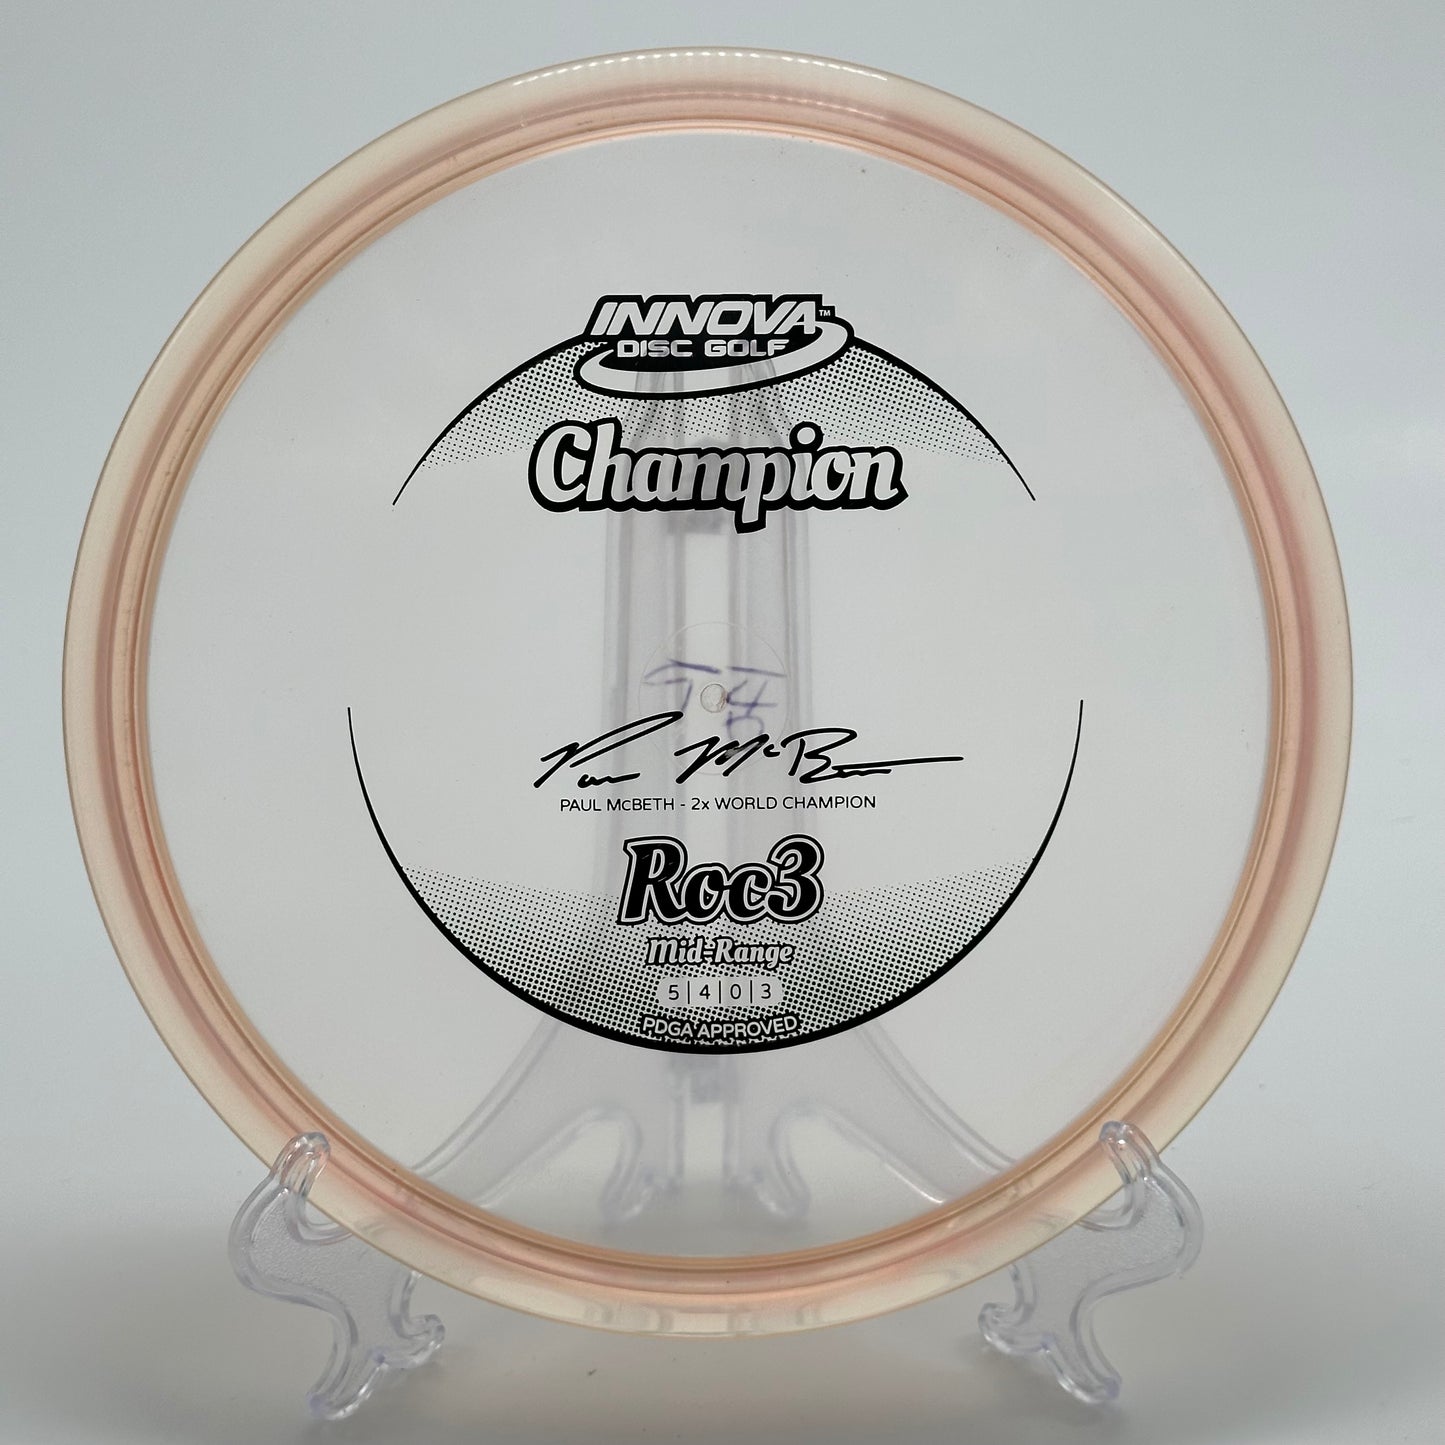 Innova Roc3 | Champion Paul McBeth 2x World Champion